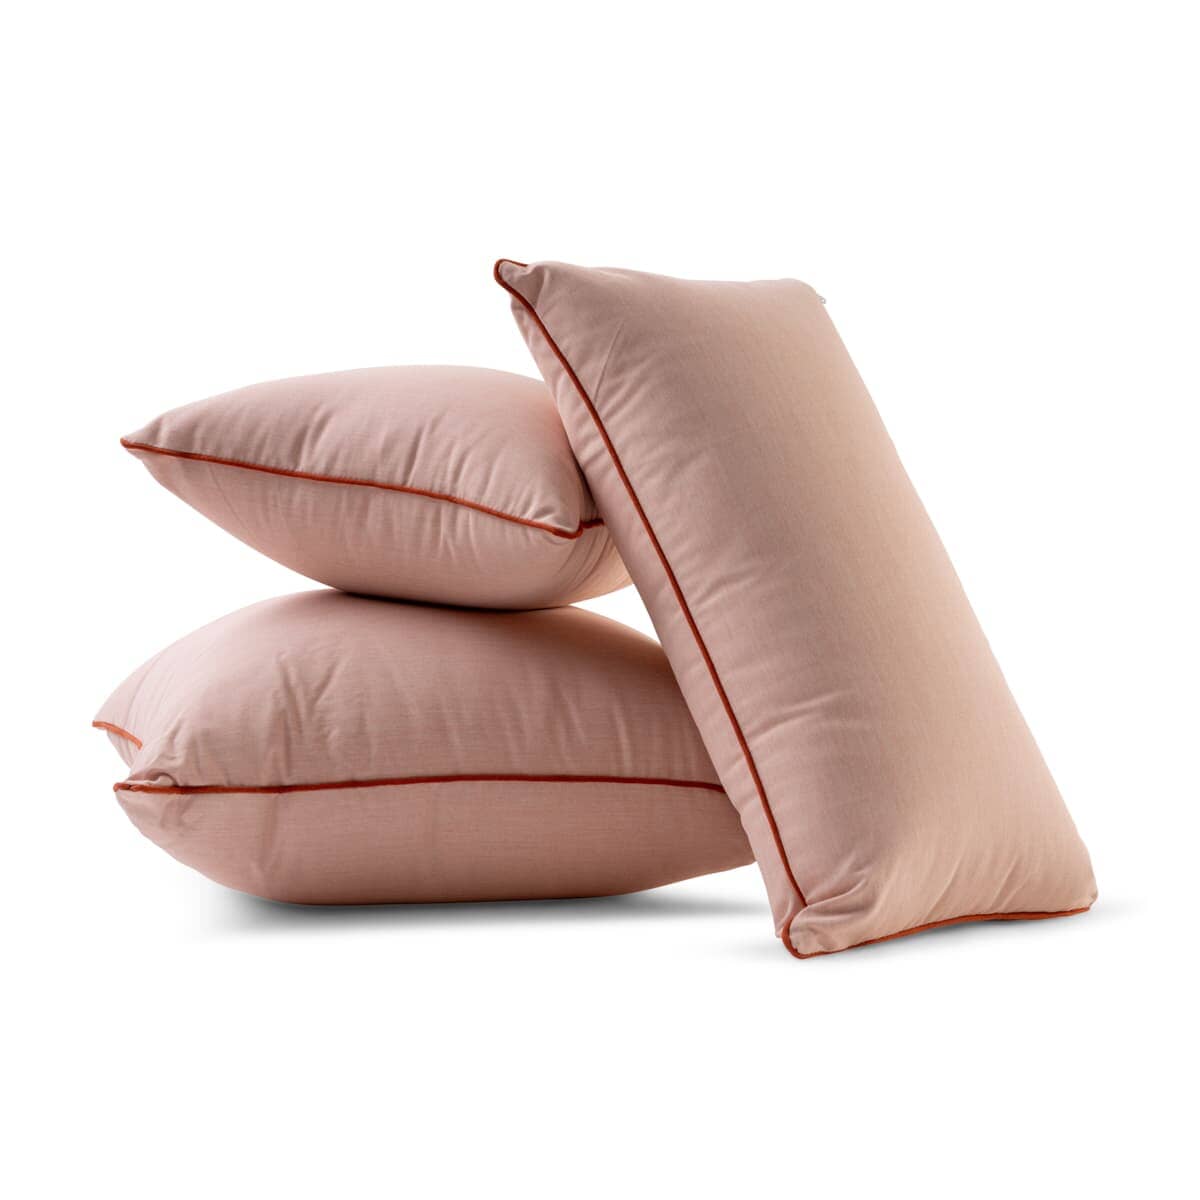 Studio image of pink cushions